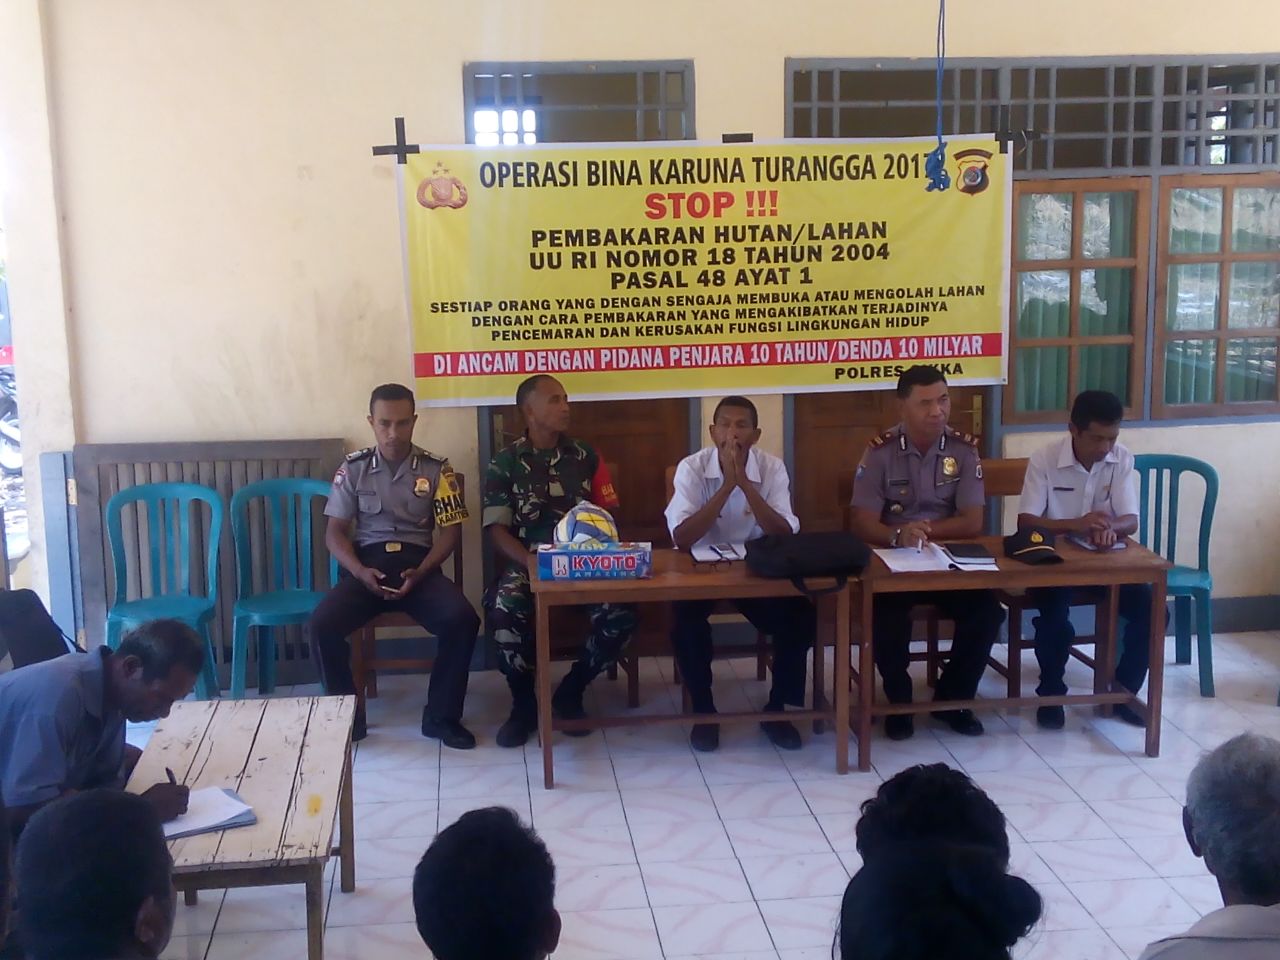 Operasi Bina Karuna 2017 : Polres Sikka Gelar Sosialisasi Pencegahan Karhutla di Desa Runut